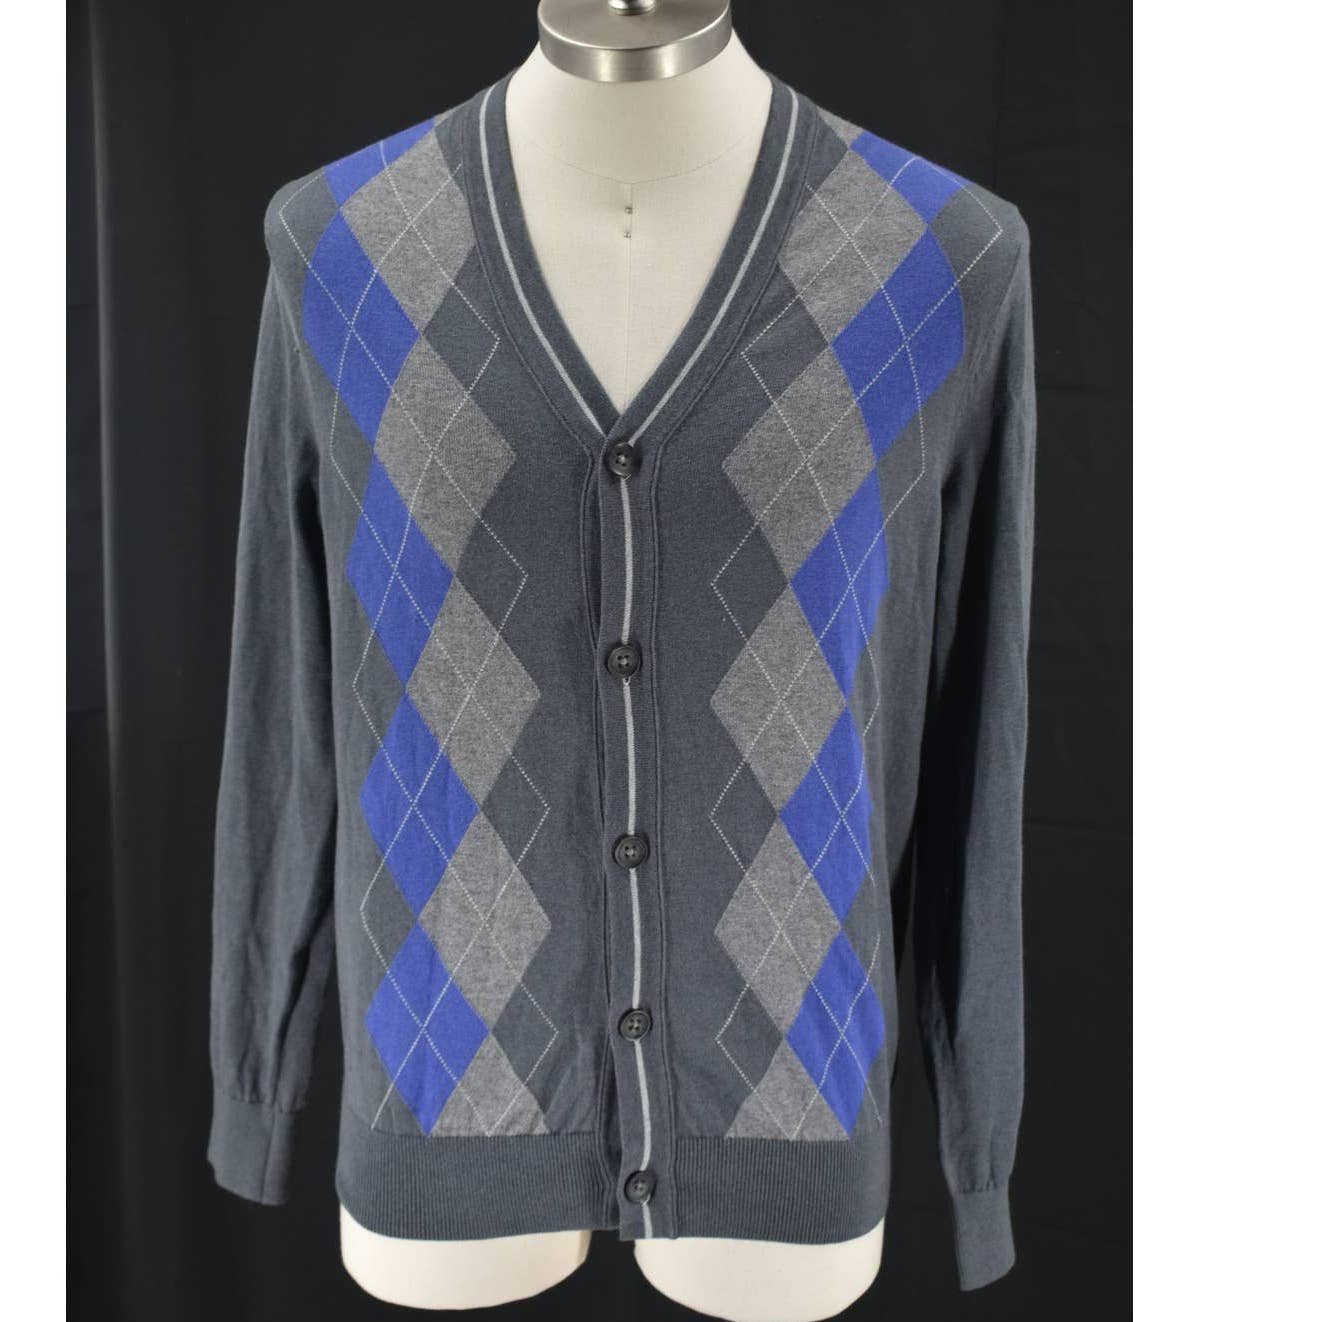 NWT Banana Republic Grey Blue Argyle Cardigan Silk Sweater - M